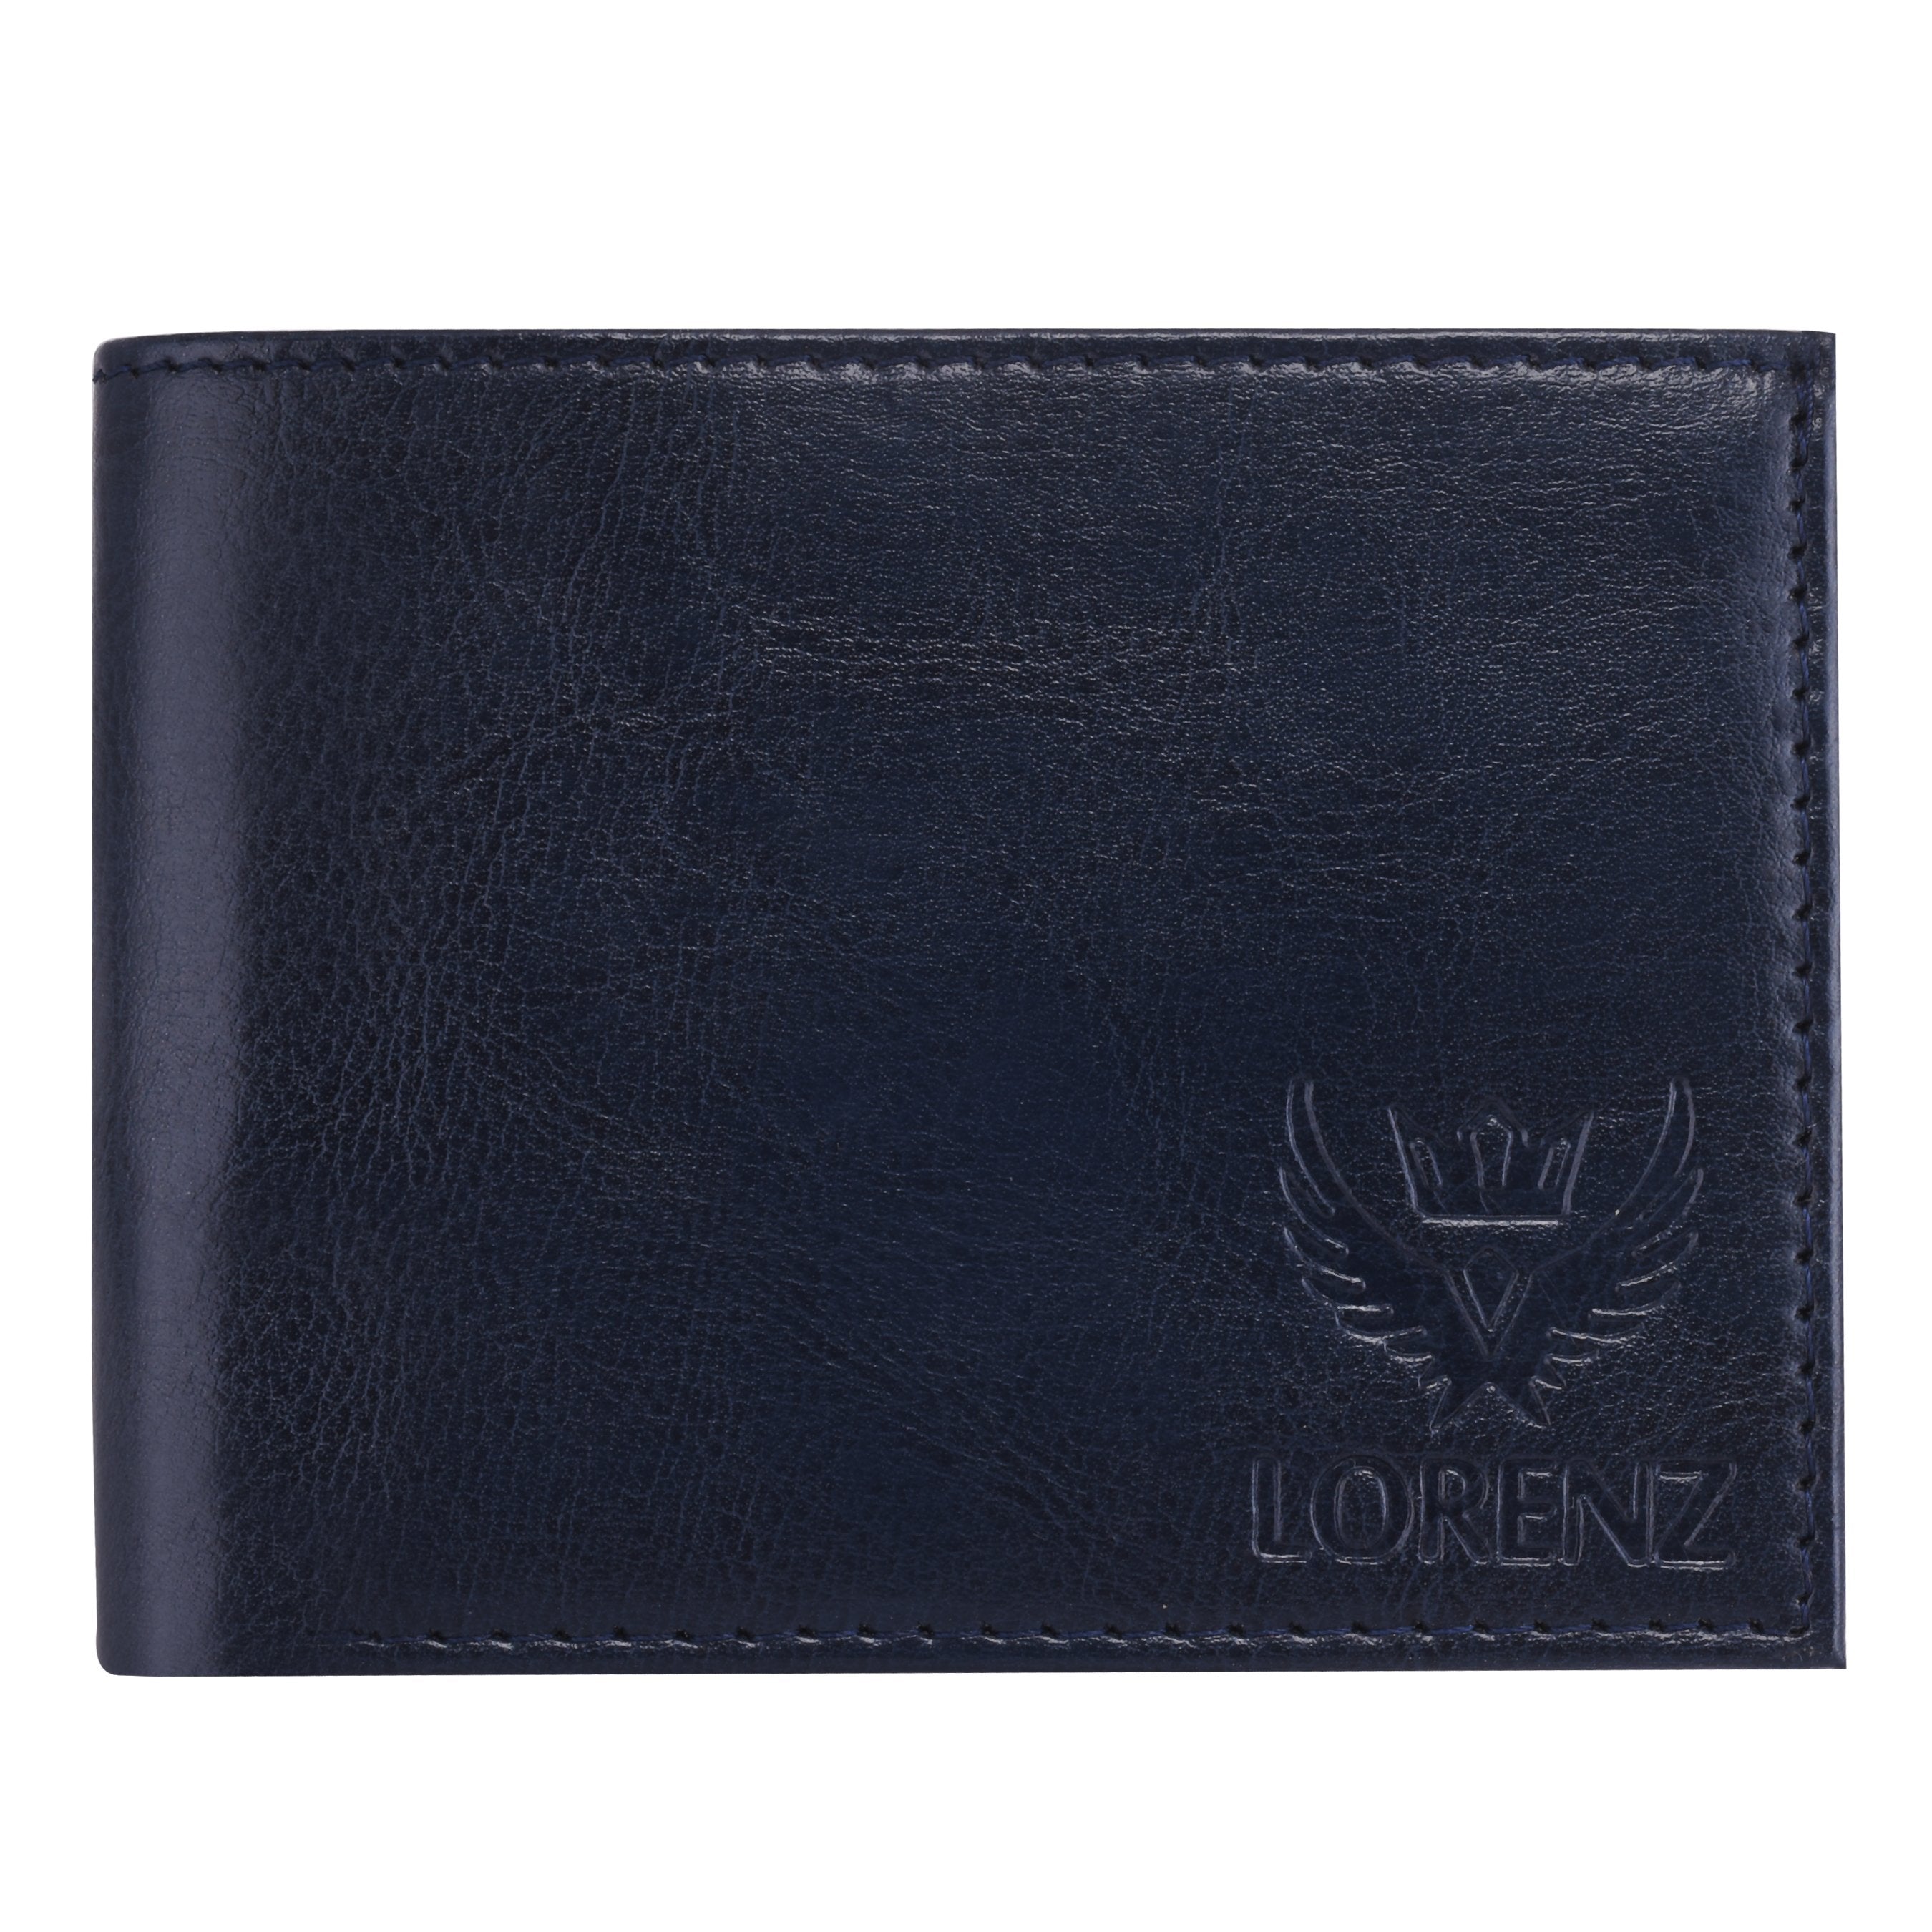 Lorenz Leather wallet